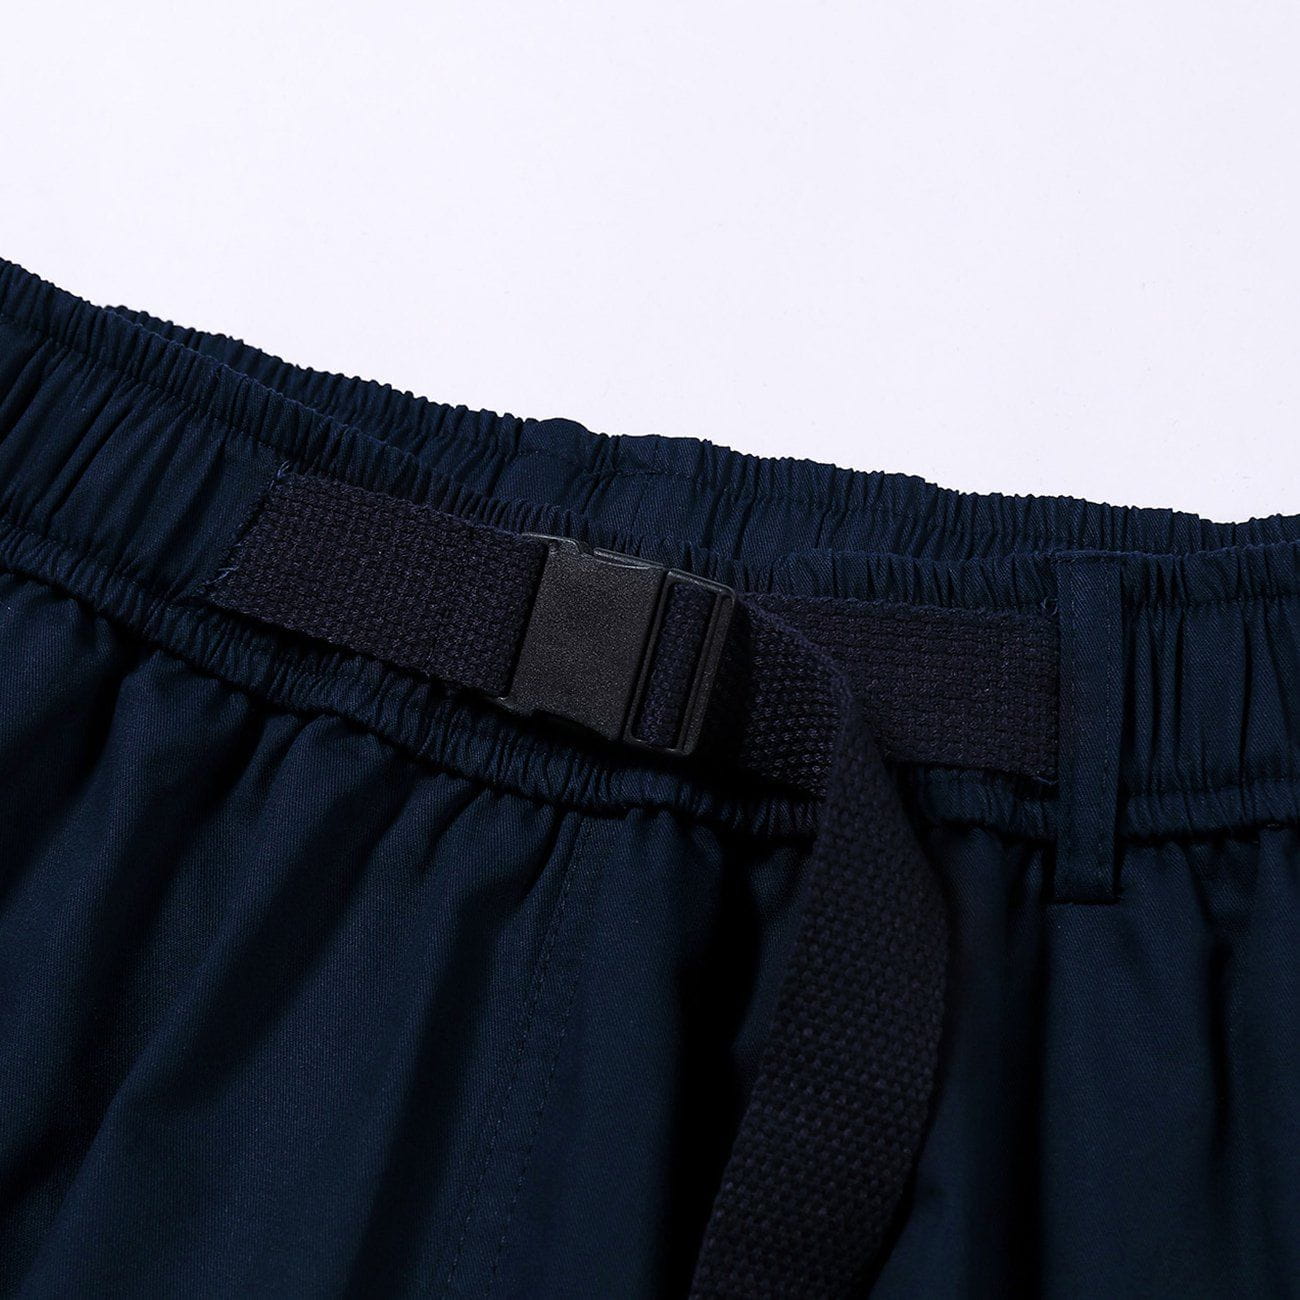 JUSTNOTAG Adjustable Waist Belt Shorts